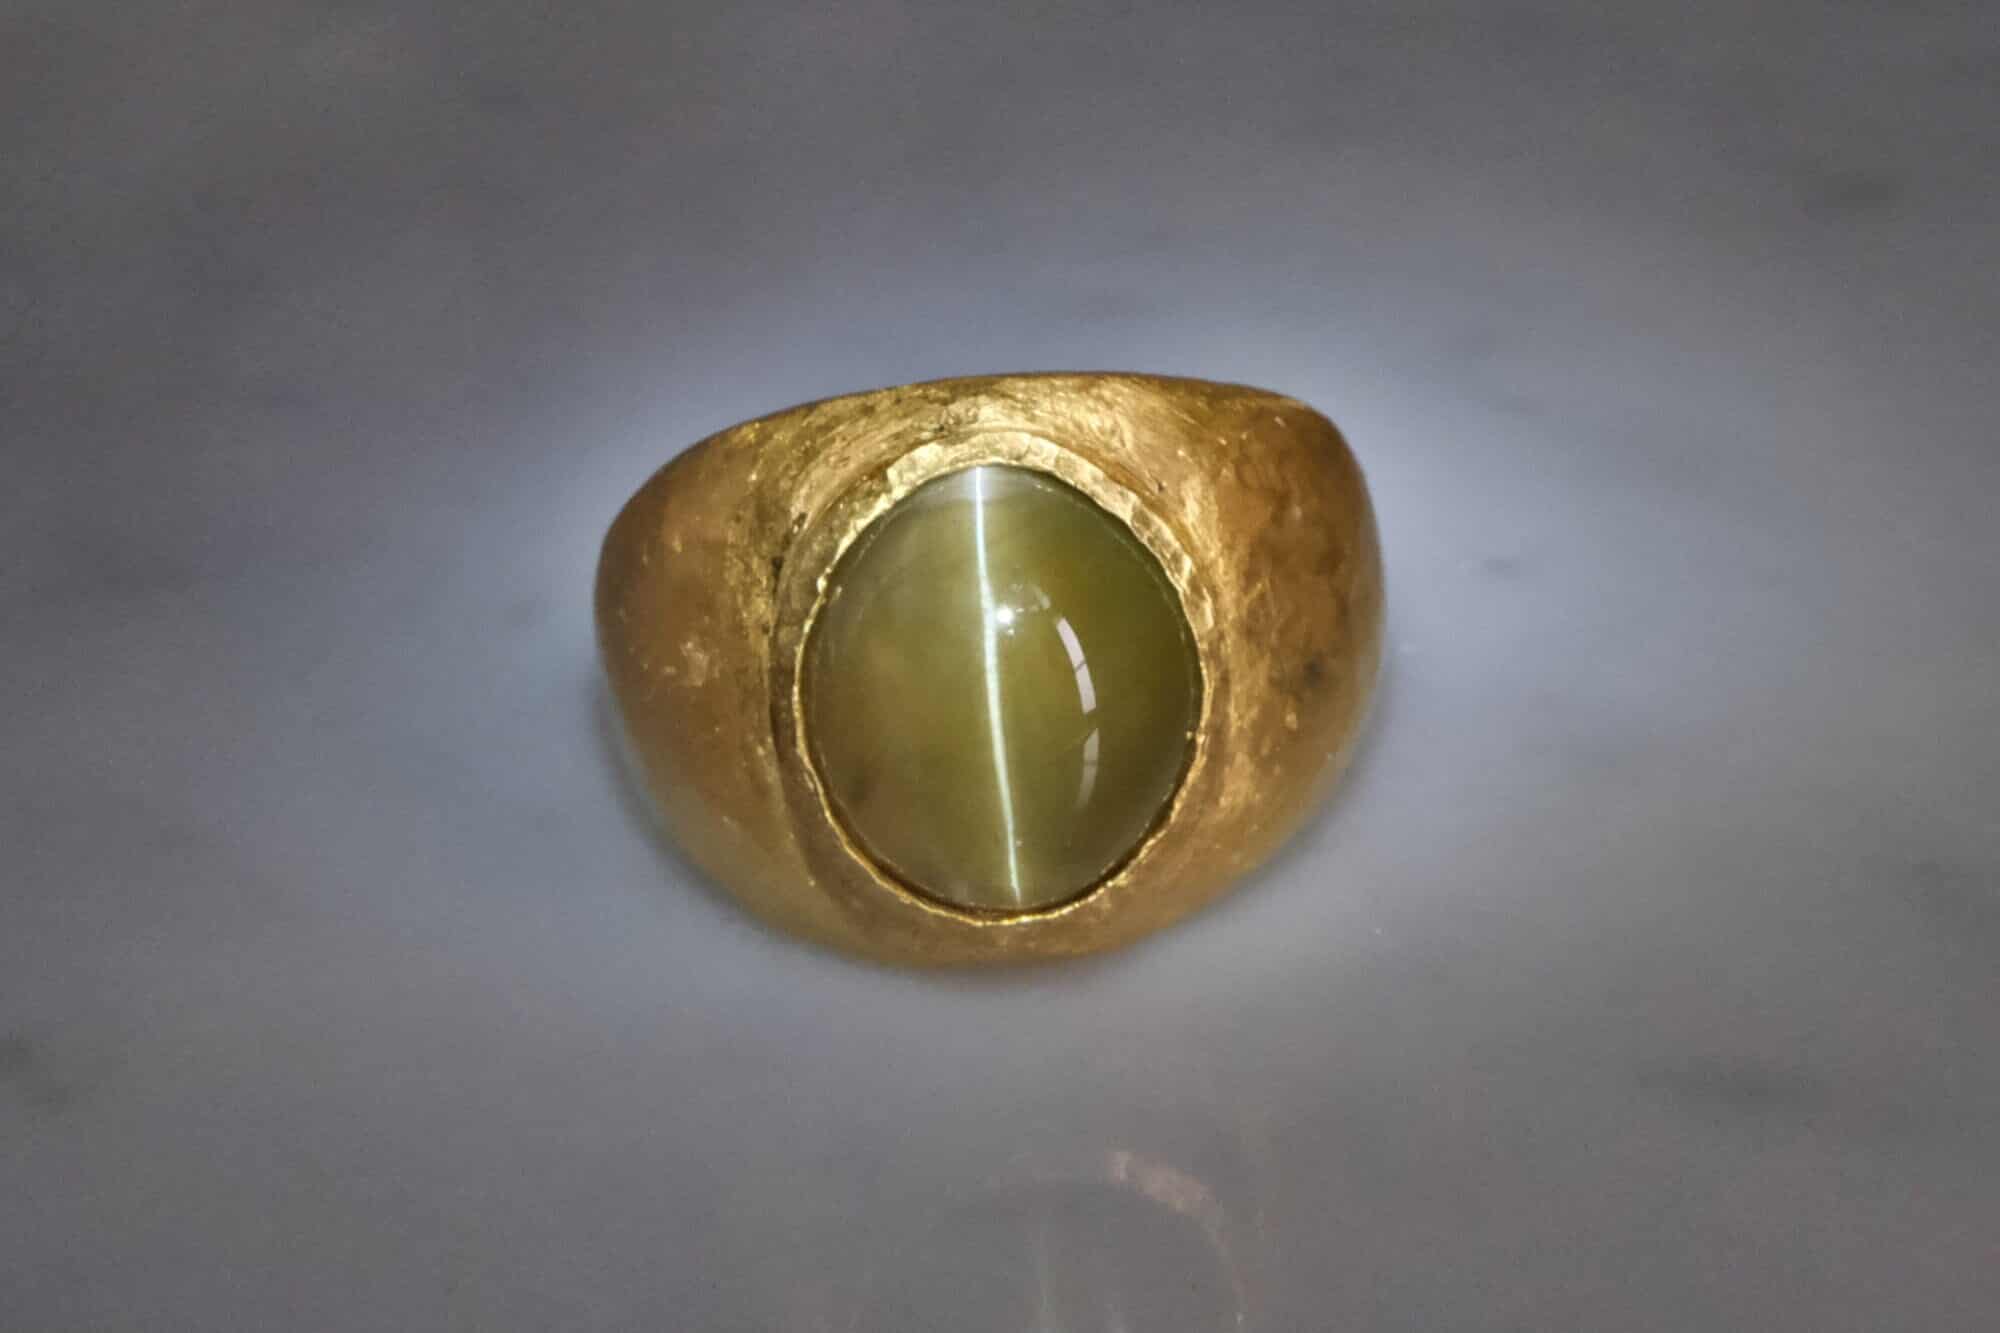 Cat's Eye Chrysoberyl Ring, large cat eye stone ring, cat eye stone mens ring, men's chrysoberyl cat's eye ring, 24k solid gold ring mens, 24k gold jewellery singapore, SIJS